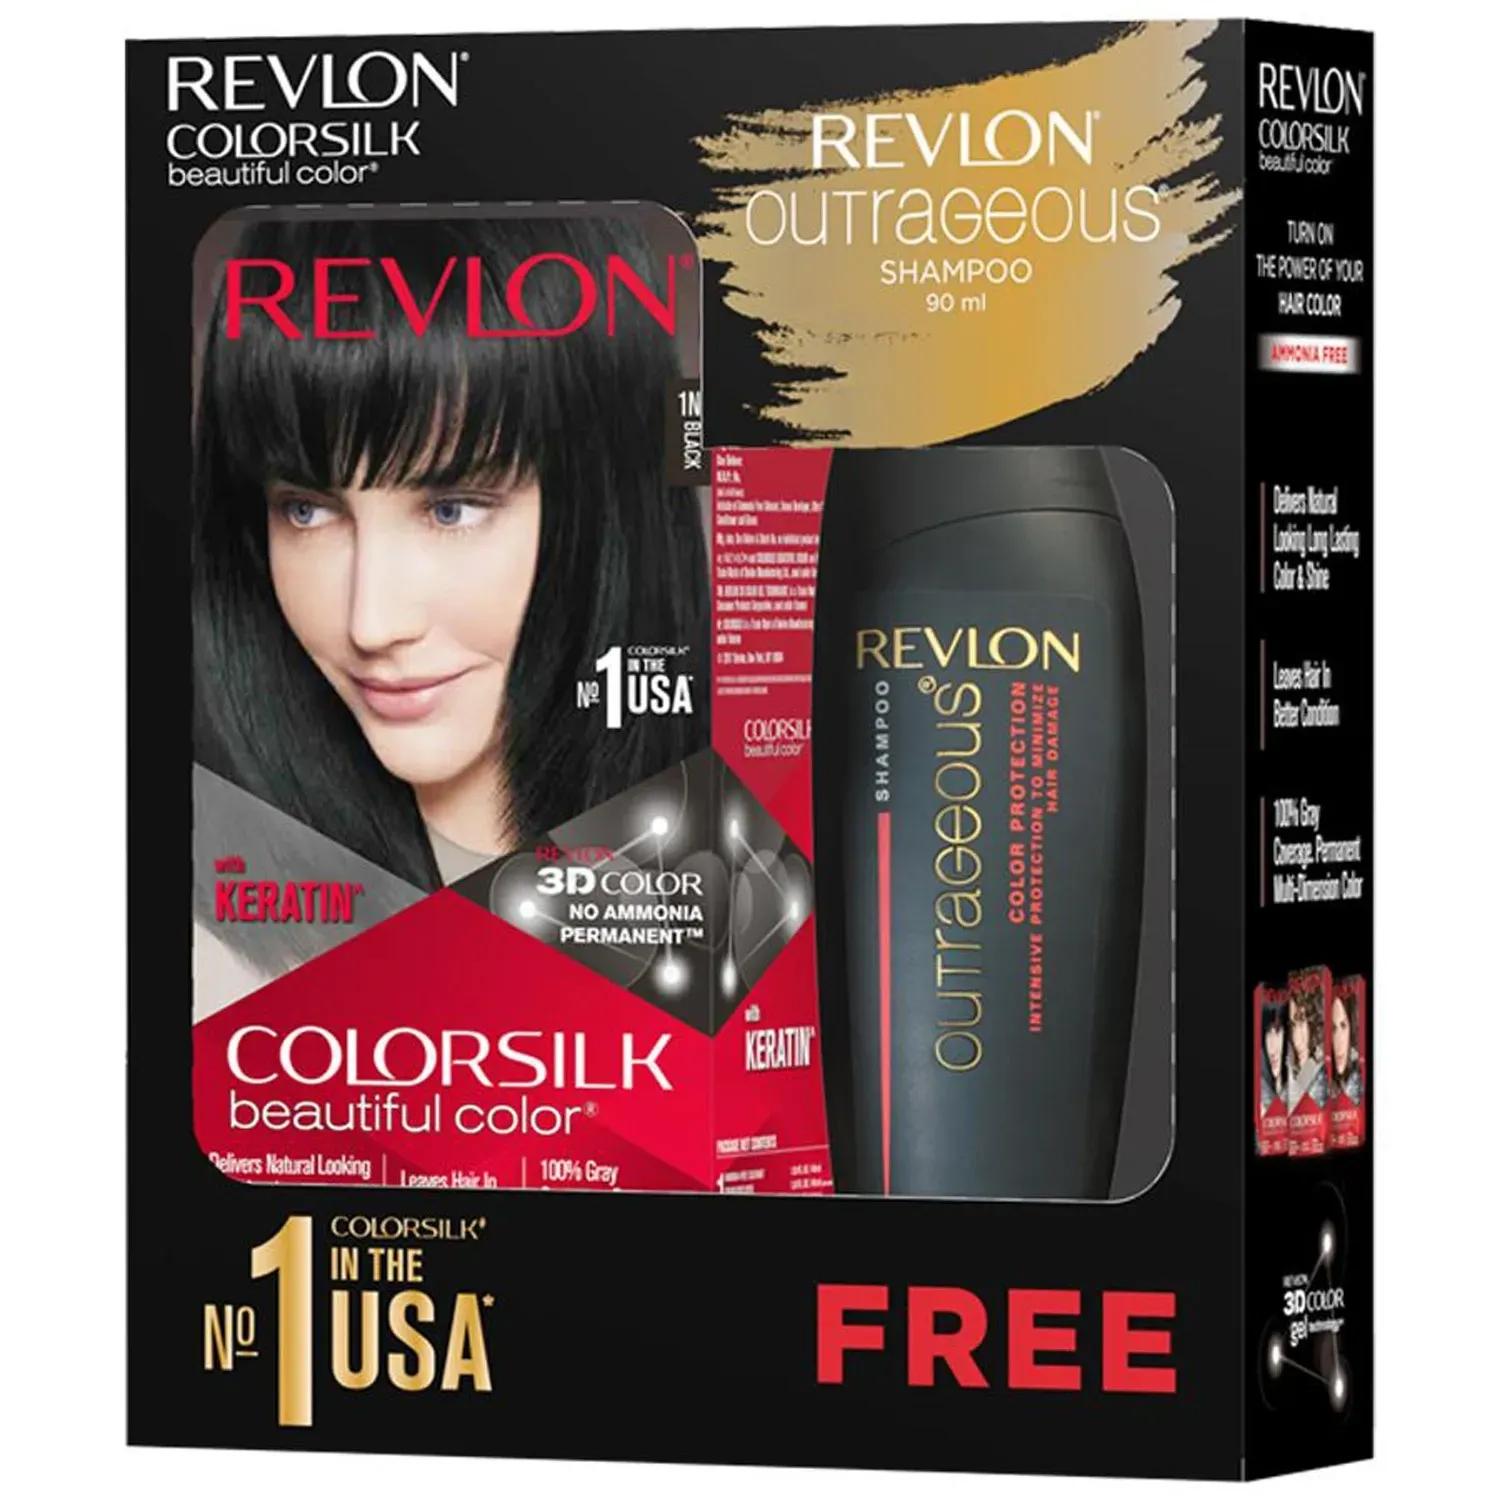 revlon colorsilk beautiful hair color with keratin + free shampoo - 1n black (90ml)